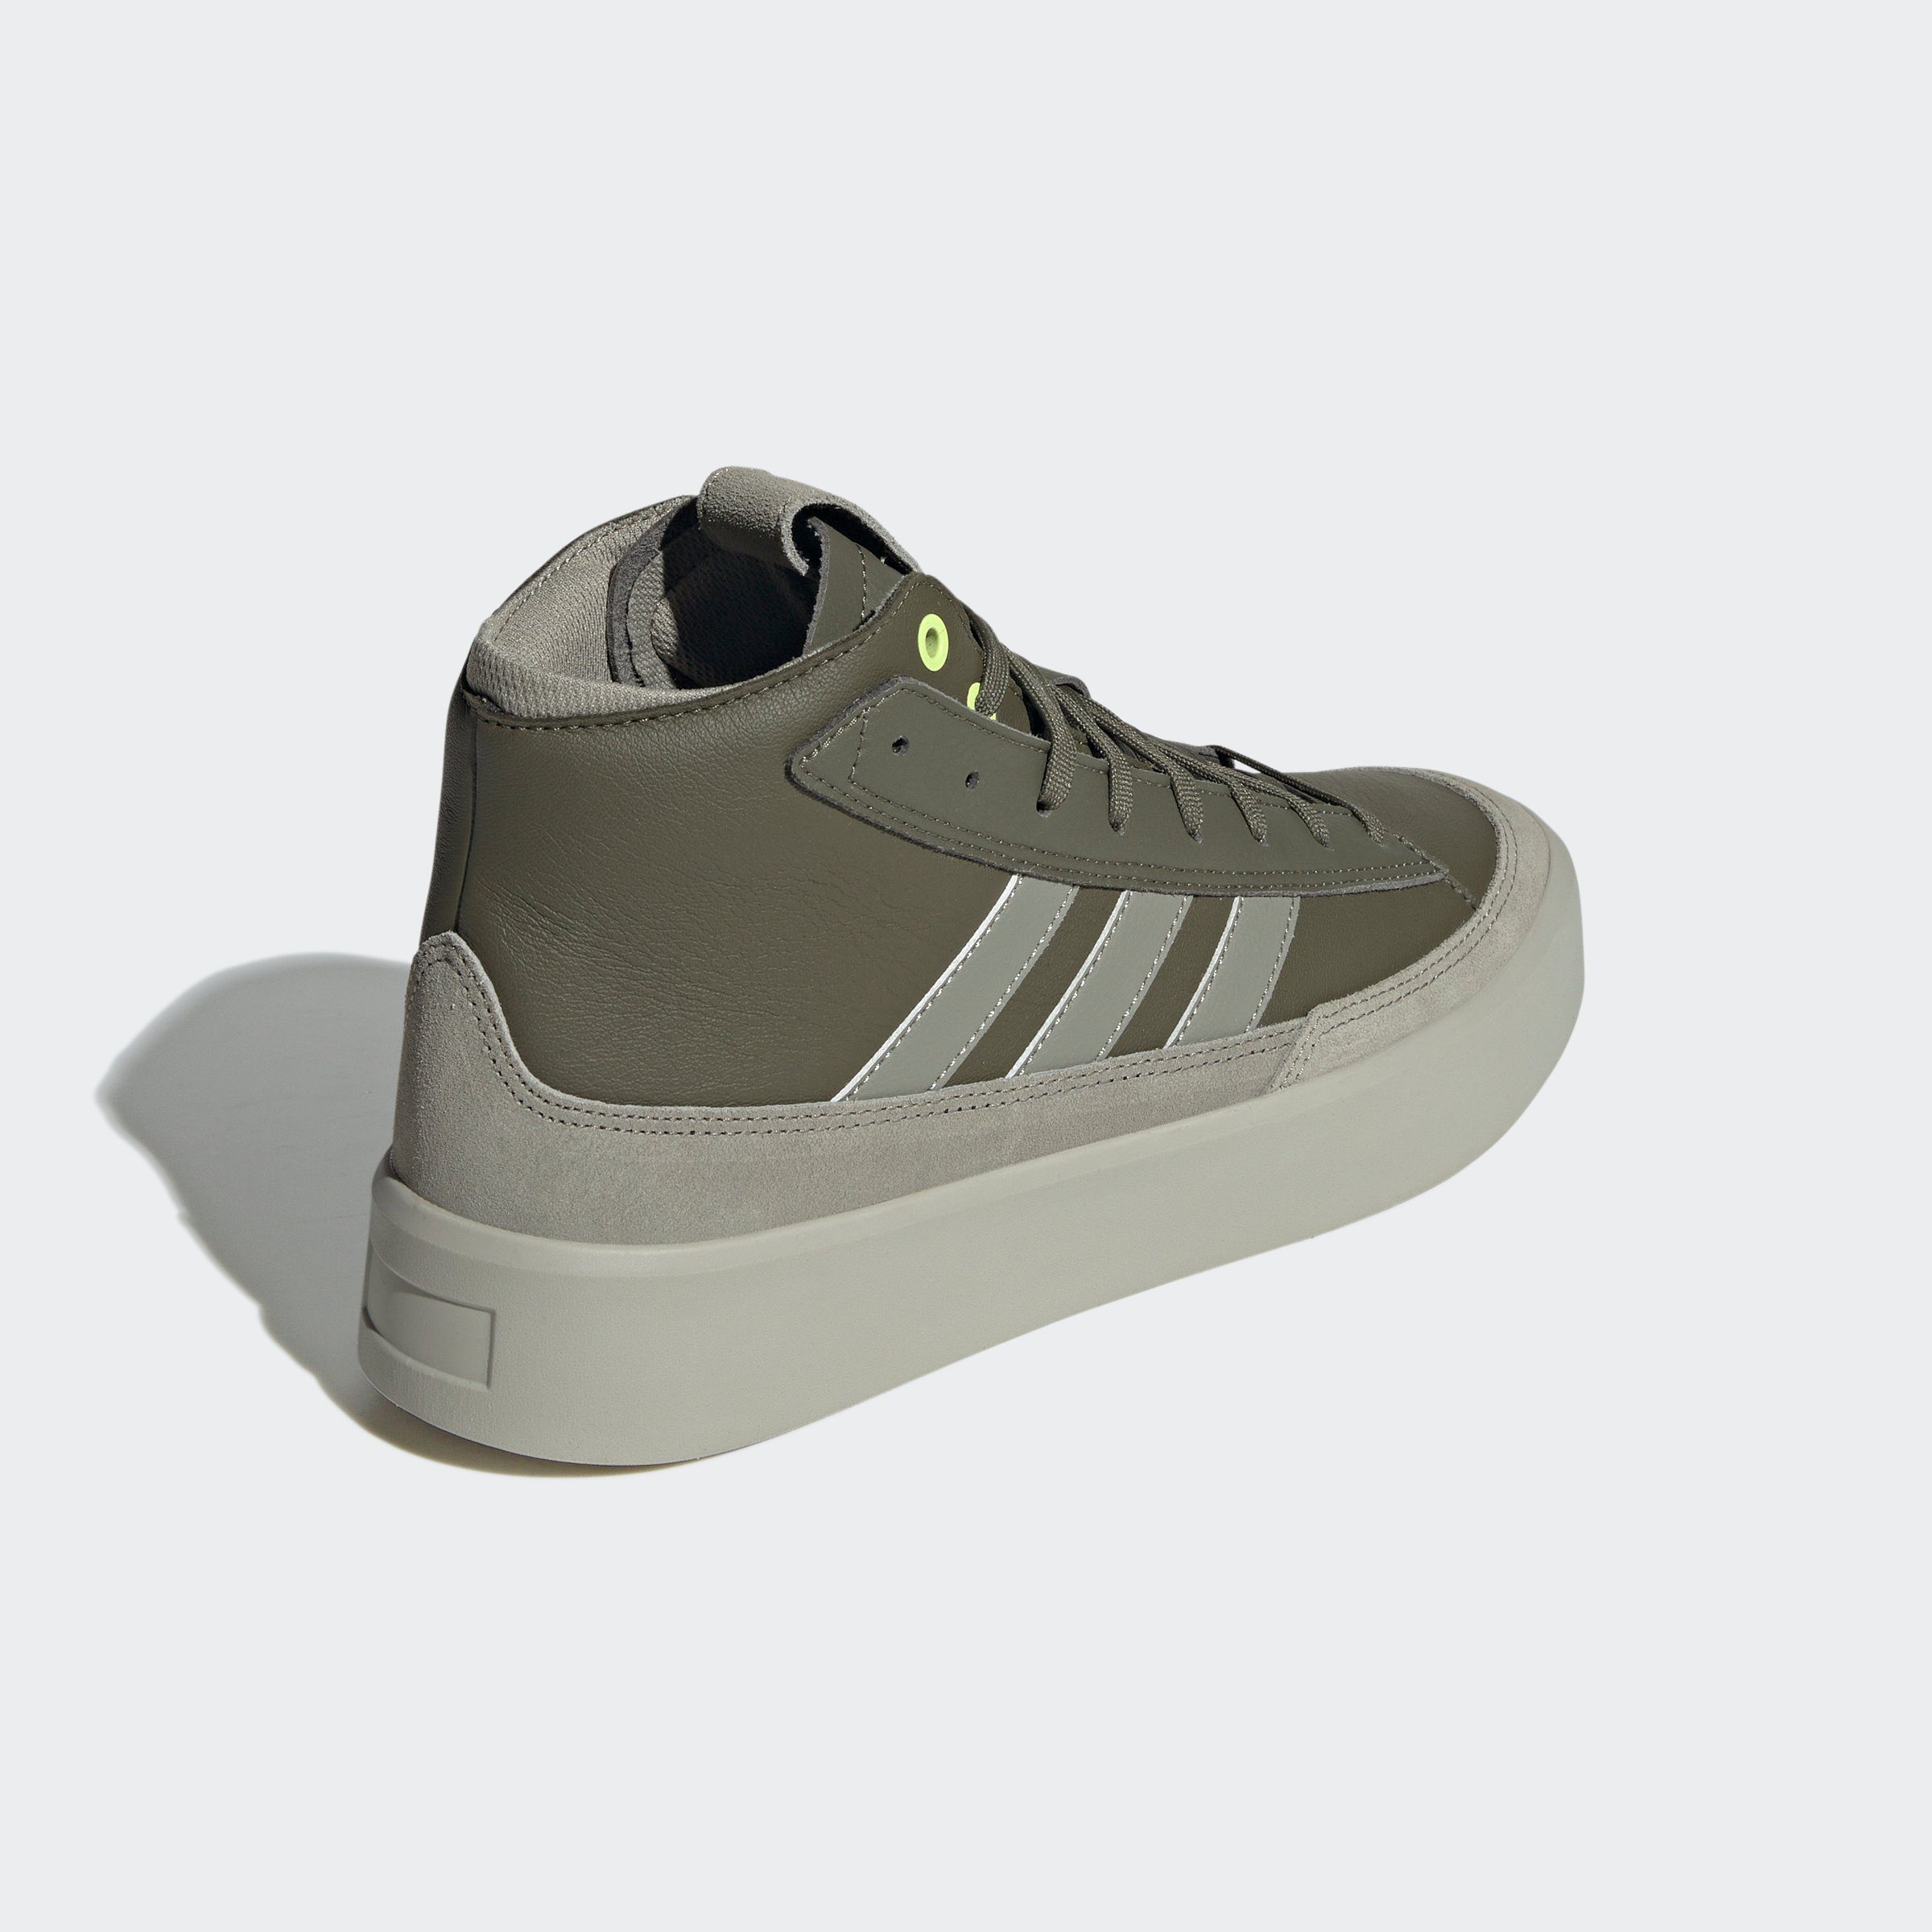 Pulse Silver adidas Sneaker Olive / Sportswear Strata / Lime ZNSORED Pebble HI